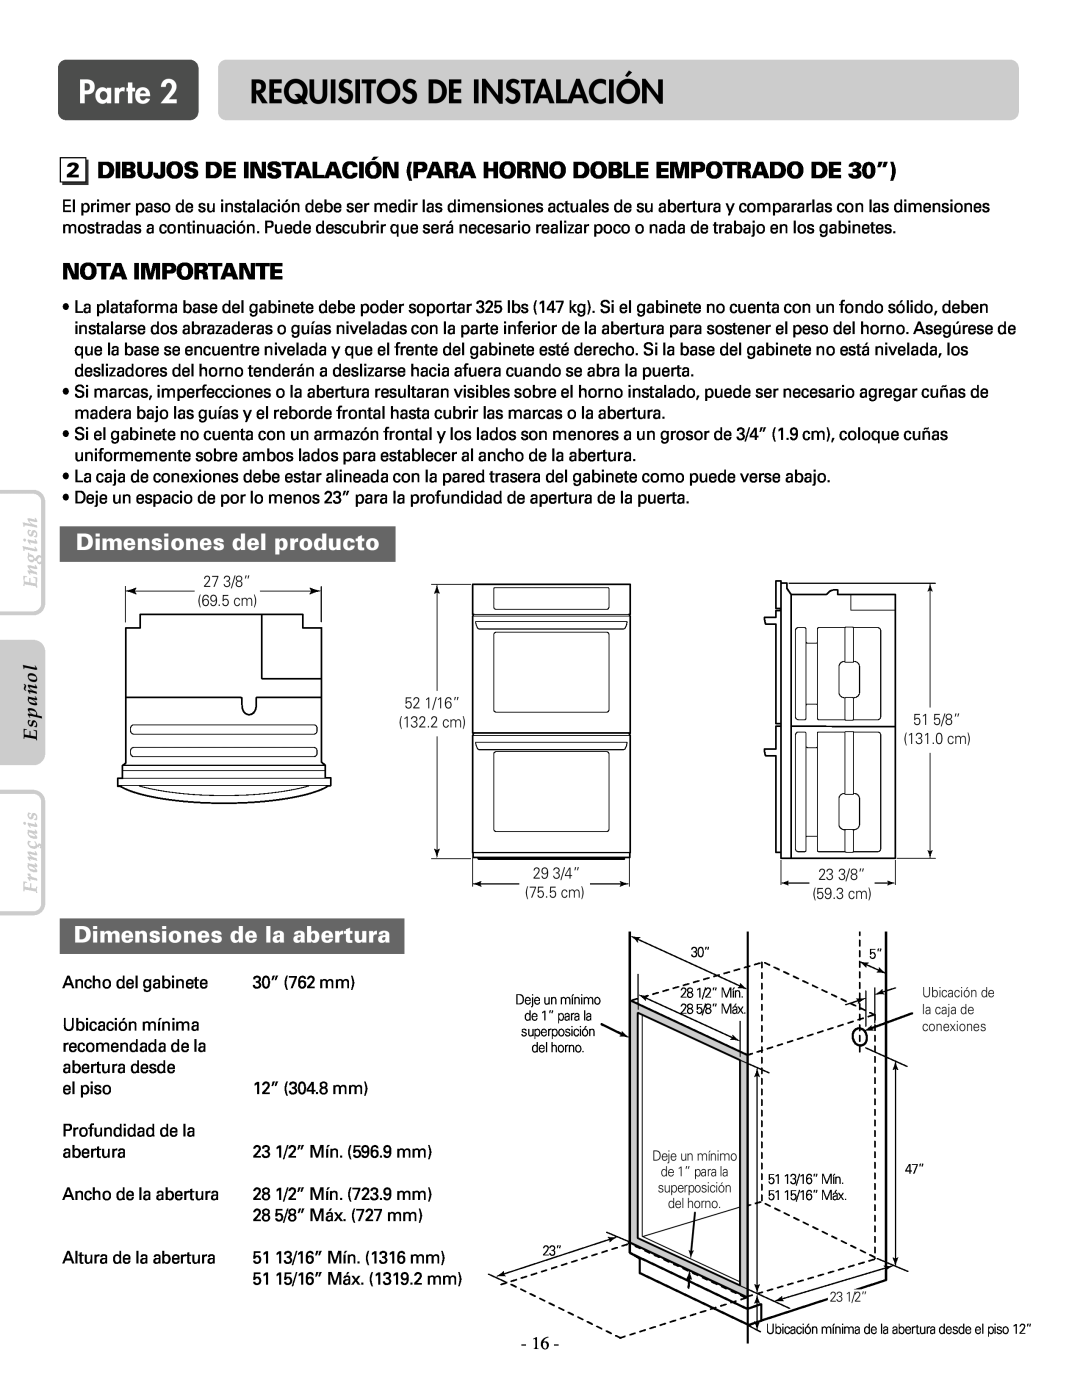 LG Electronics LWS3081ST DIBUJOS DE INSTALACIÓN PARA HORNO DOBLE EMPOTRADO DE 30”, Parte 2 REQUISITOS DE INSTALACIÓN 